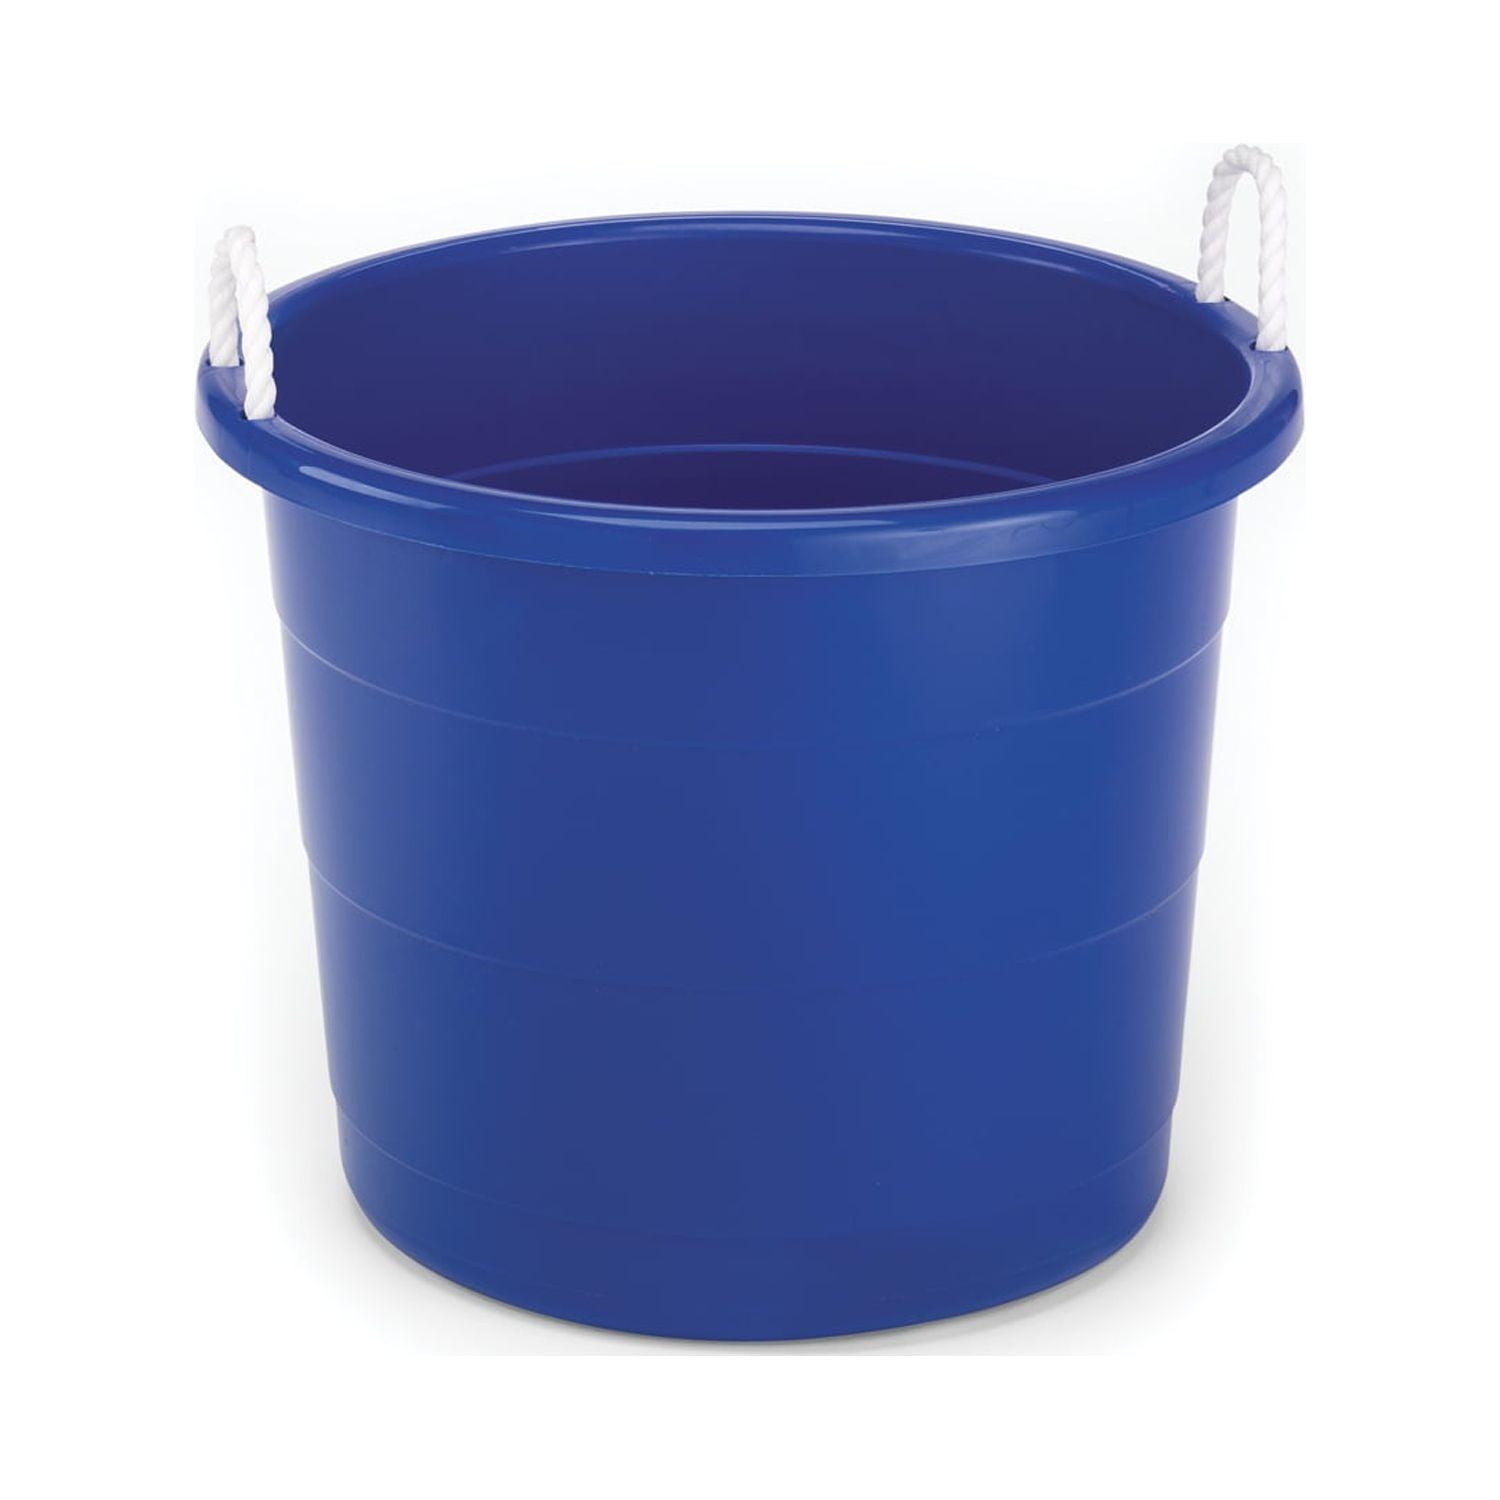 27in. Sky Blue Plastic Bucket